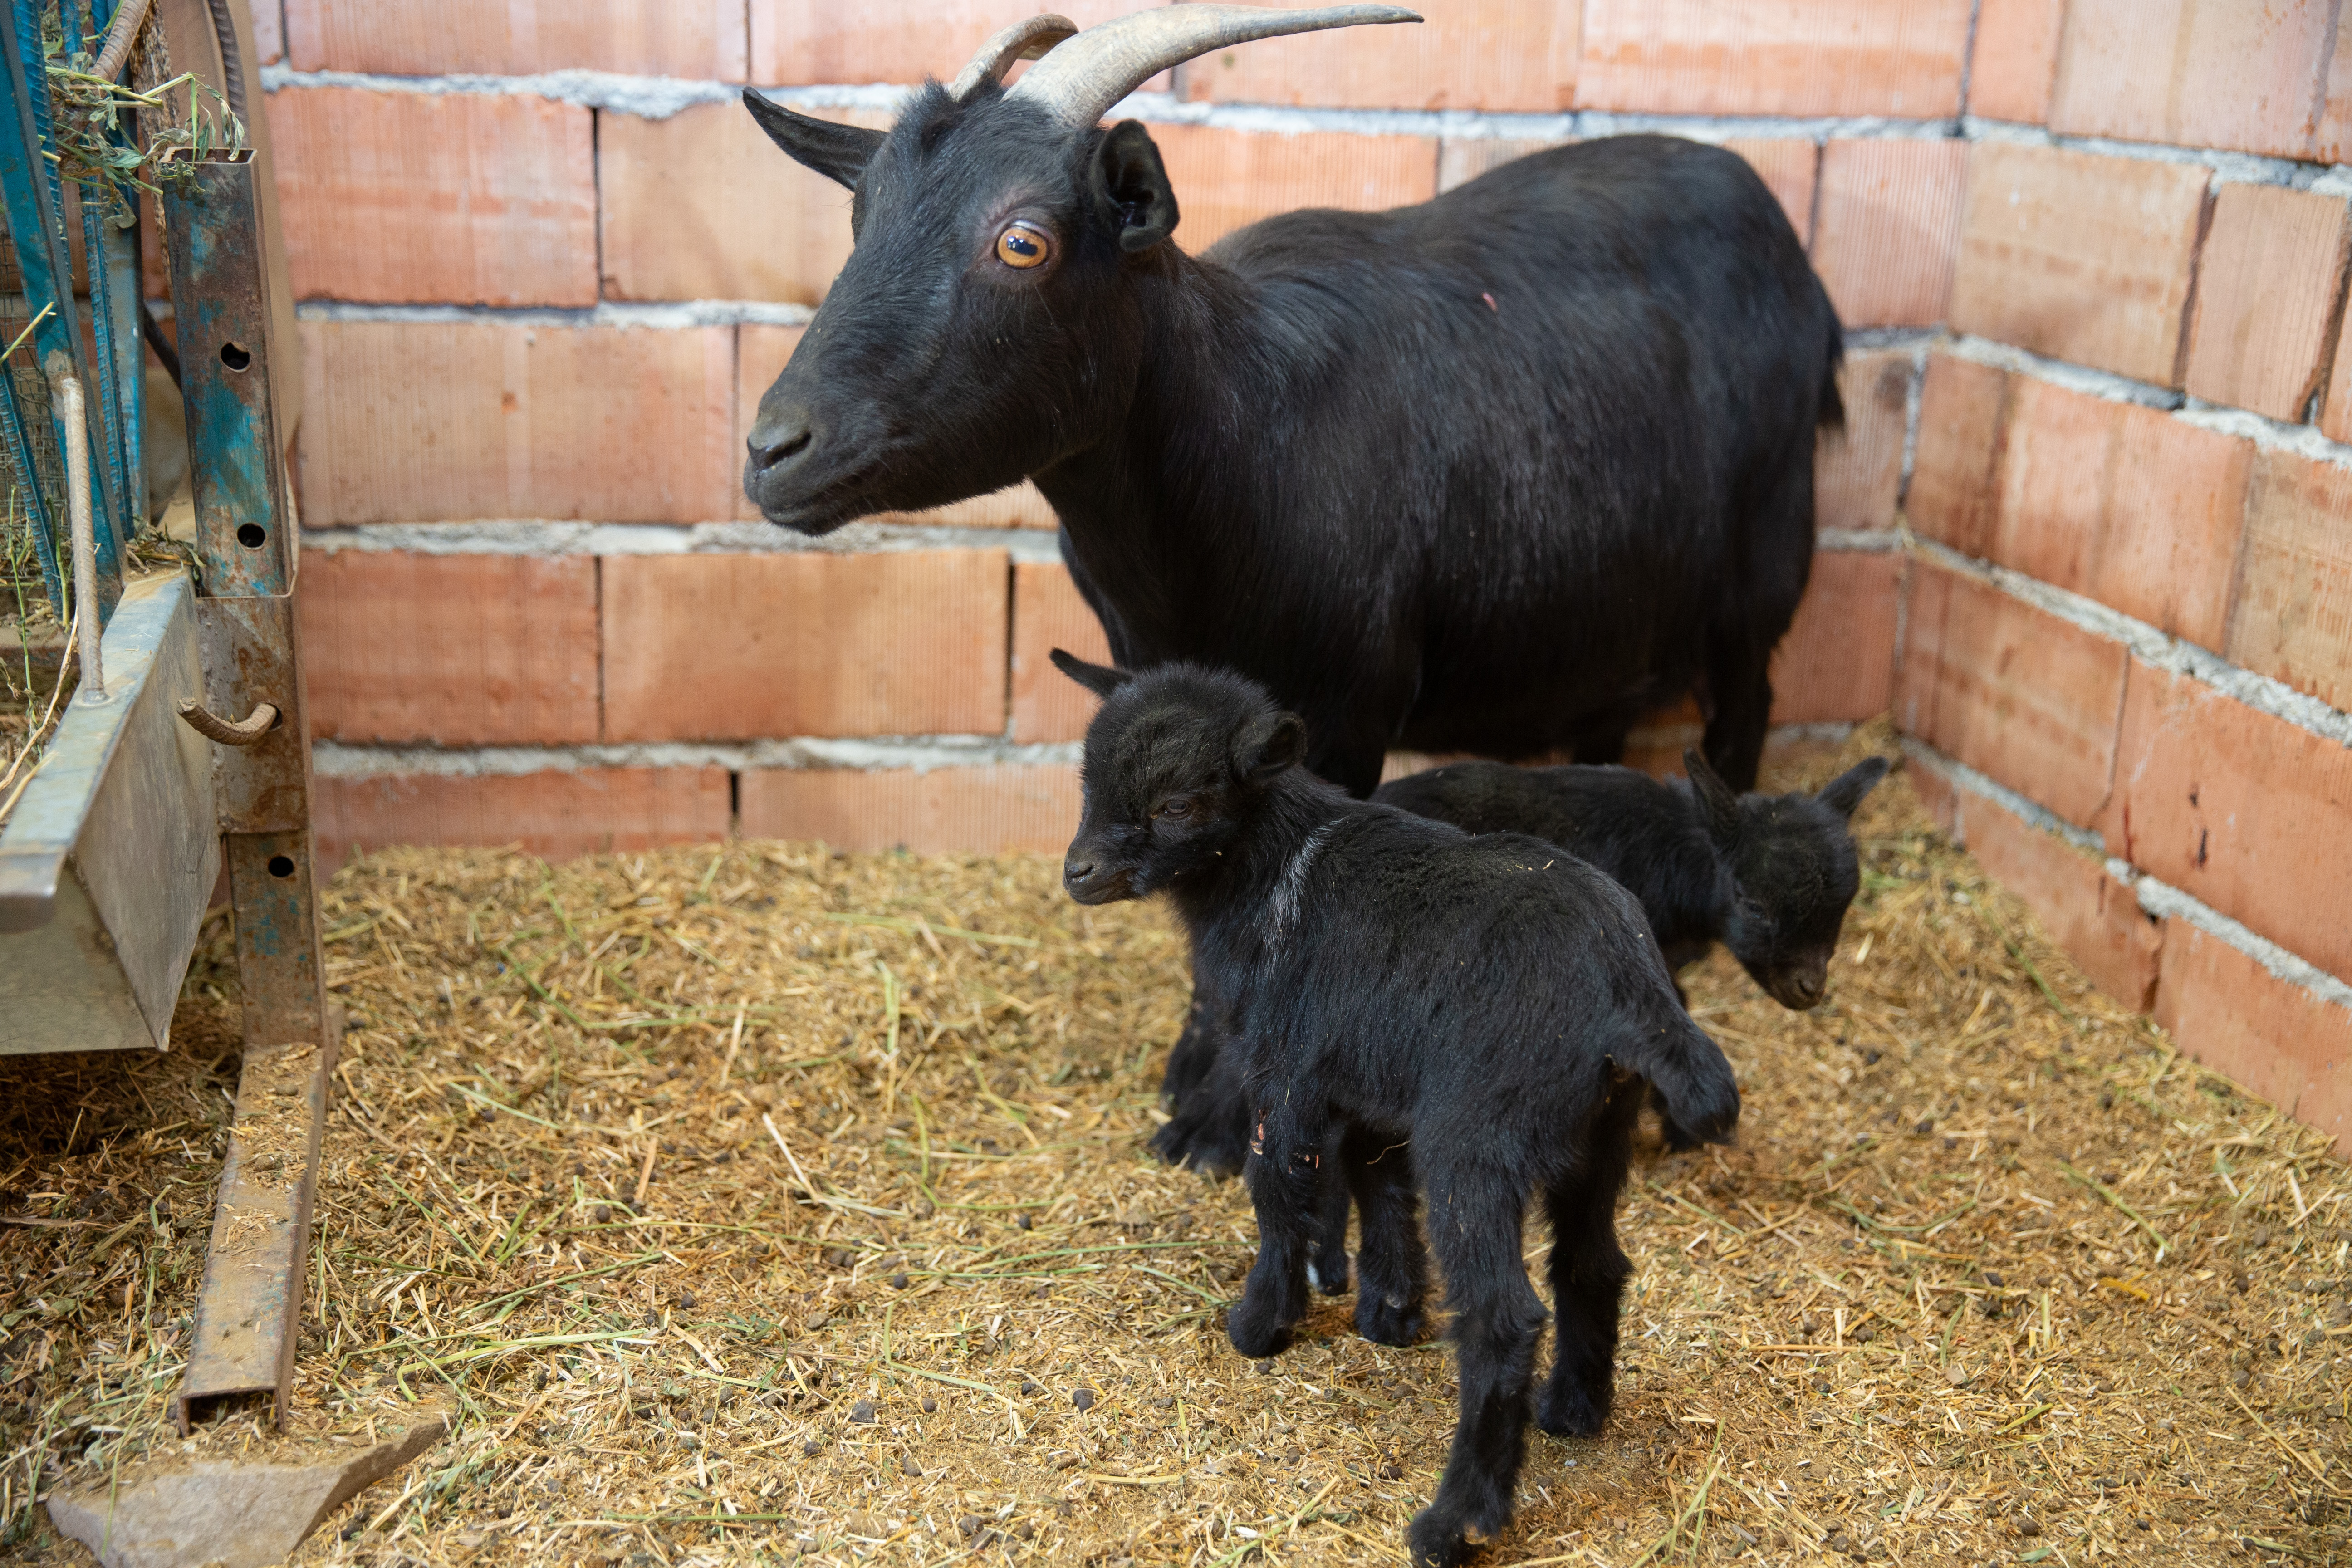 Goat triplet born at Zoo in Turkiye’s Ankara